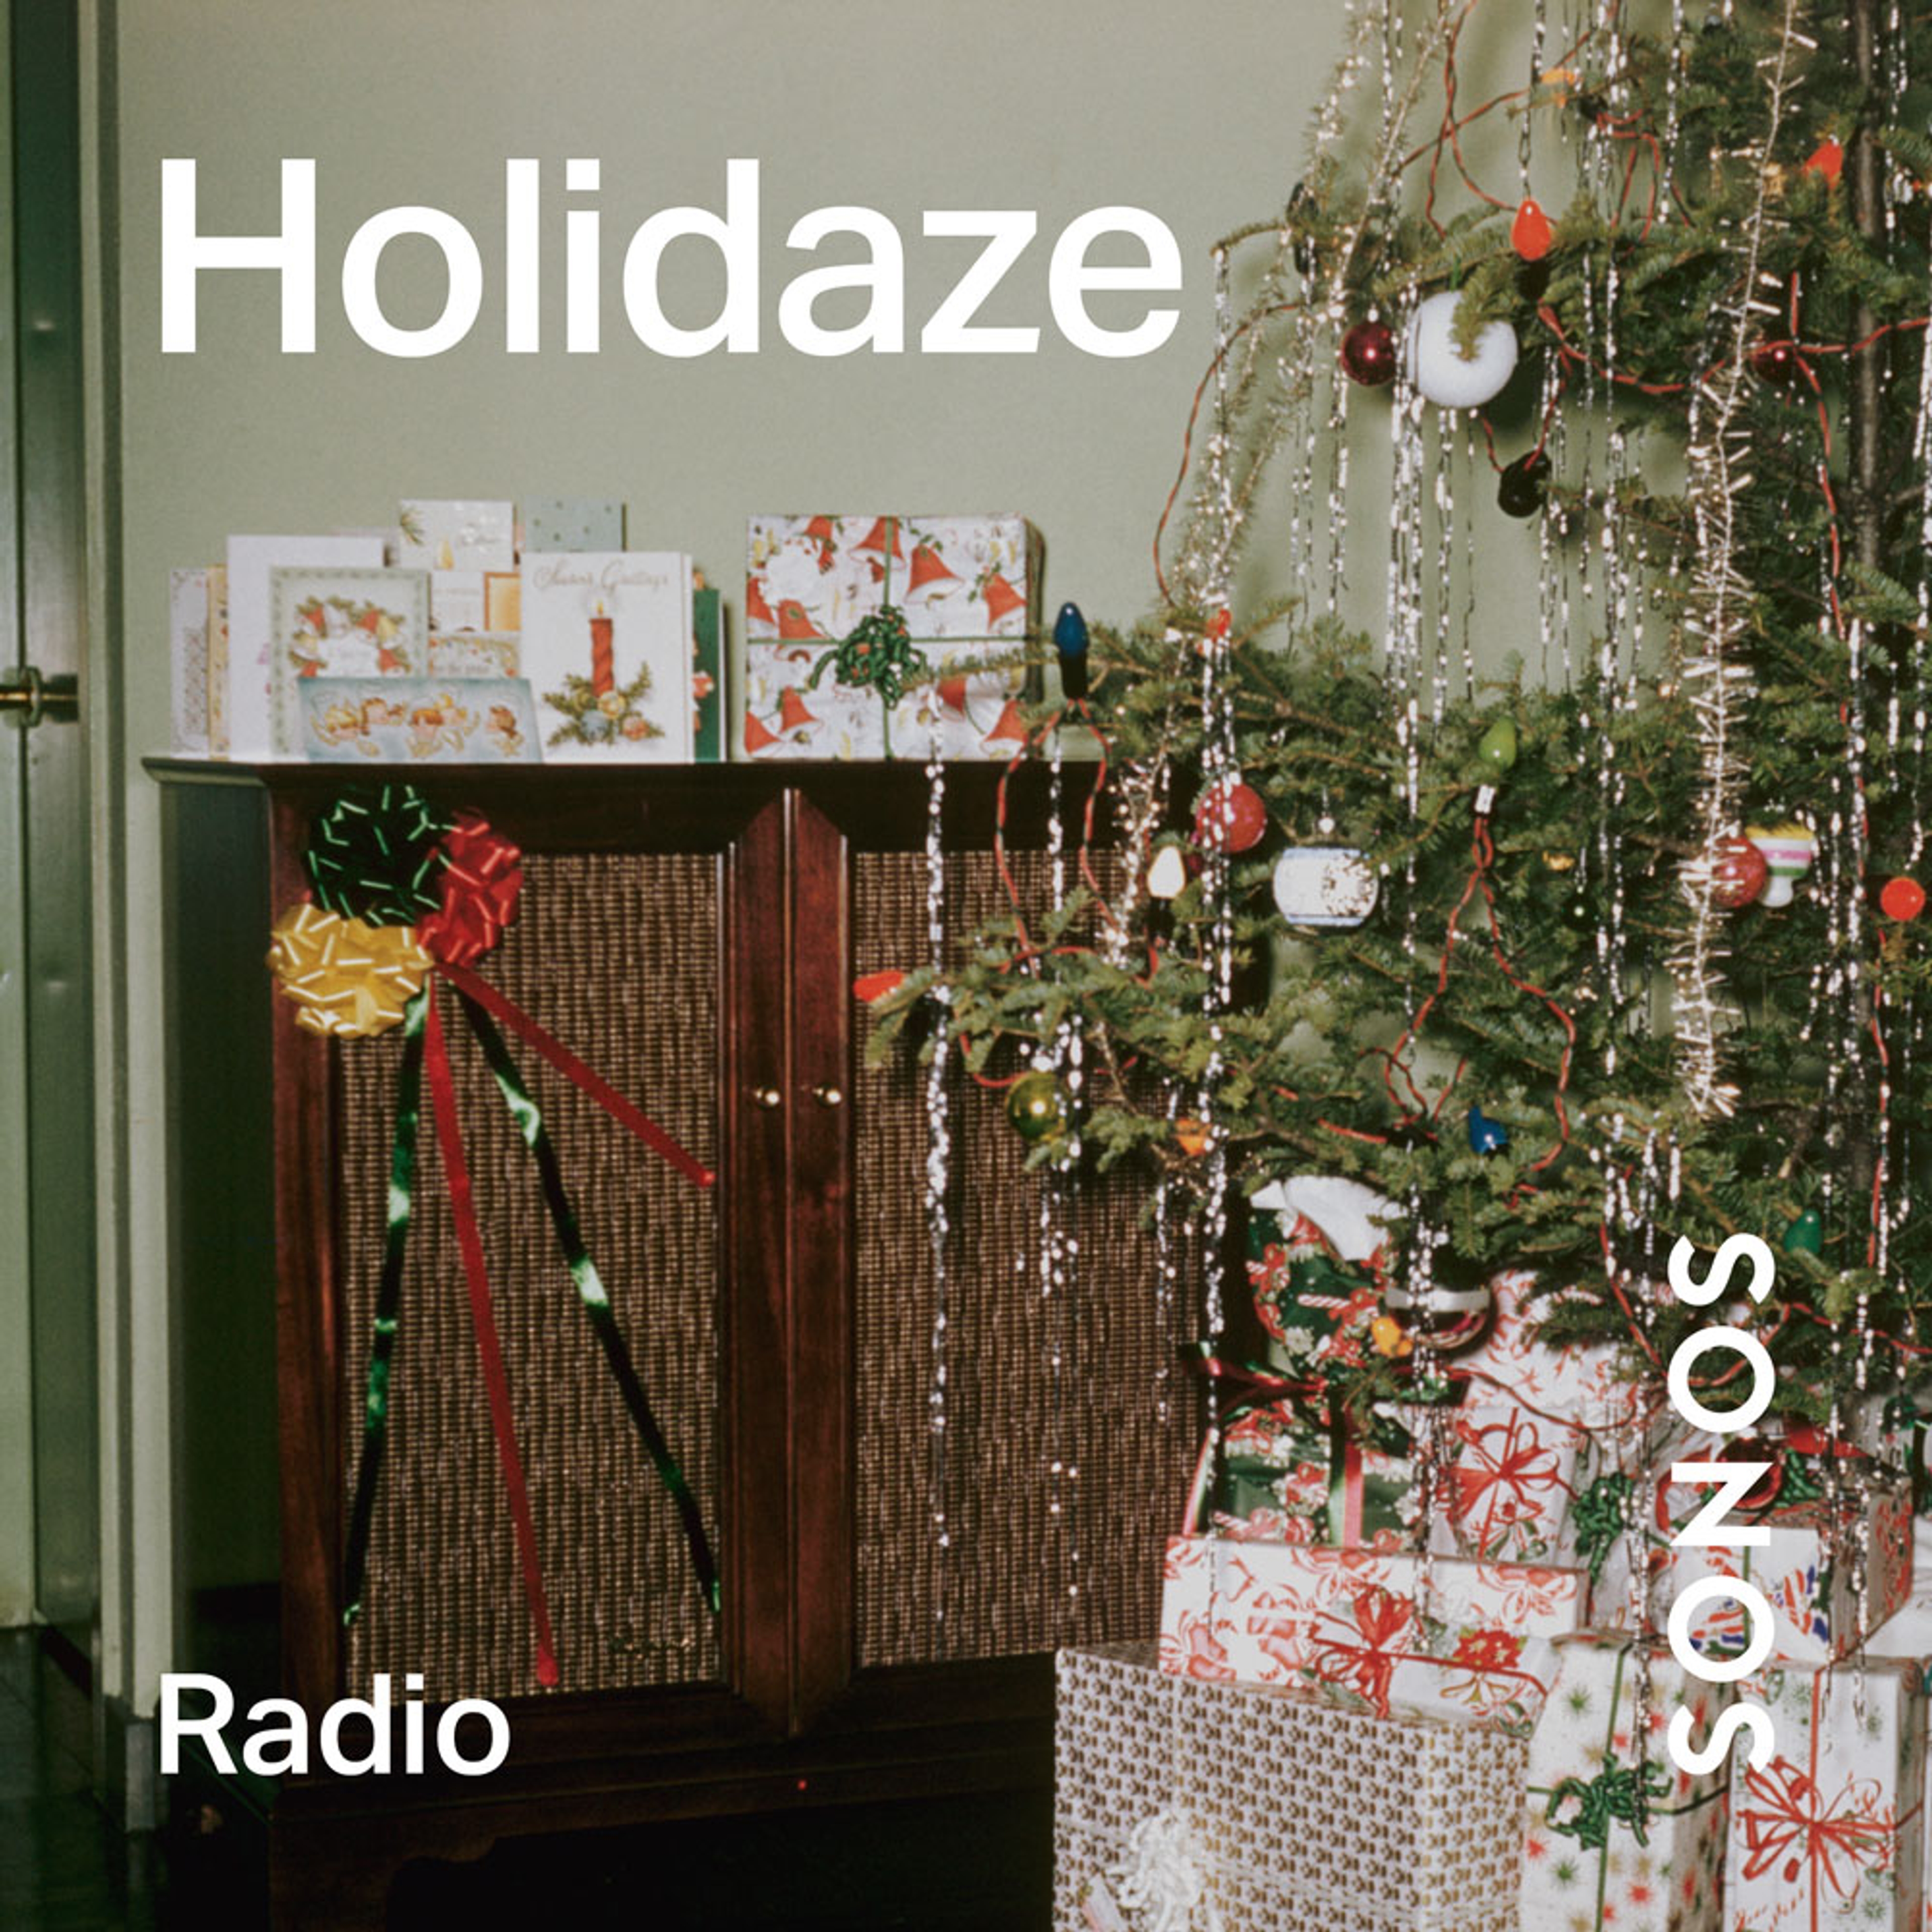 Holidaze radio station cover